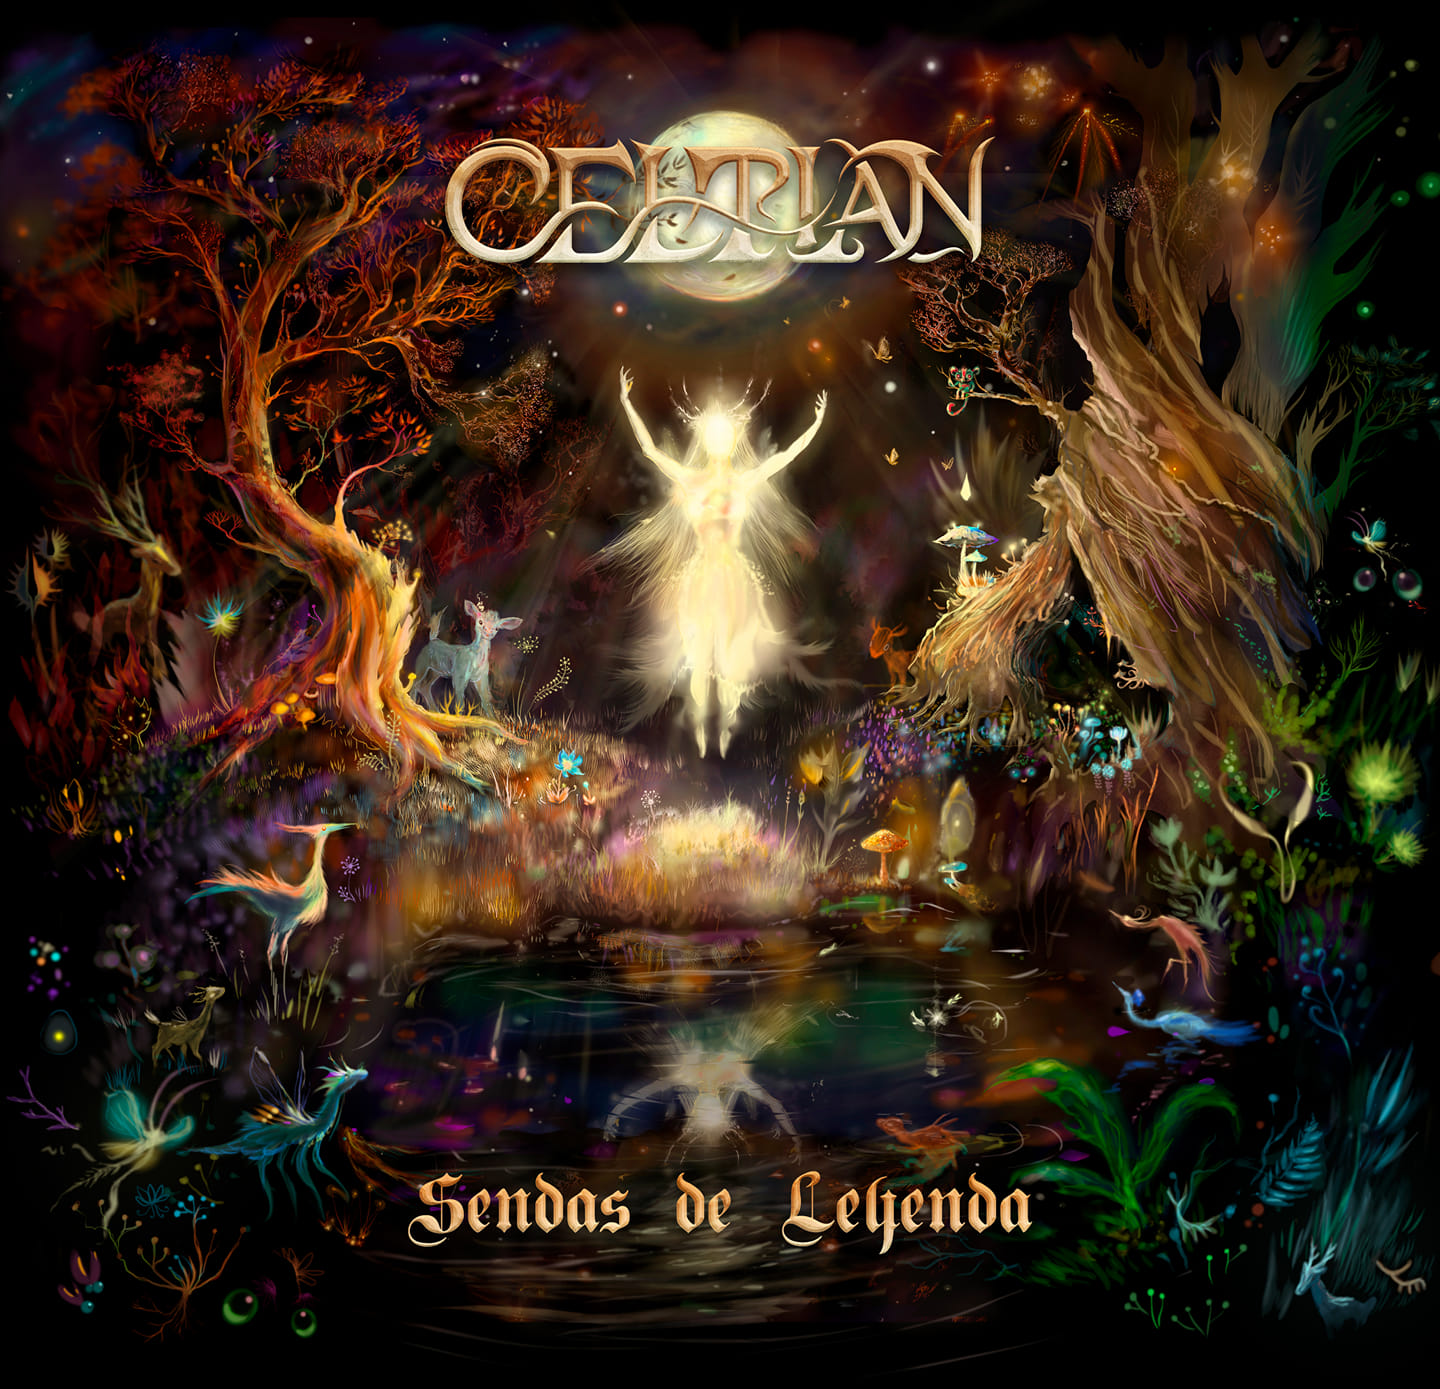 Végre! Albumpremier + vélemény: Celtian – Sendas de Leyenda